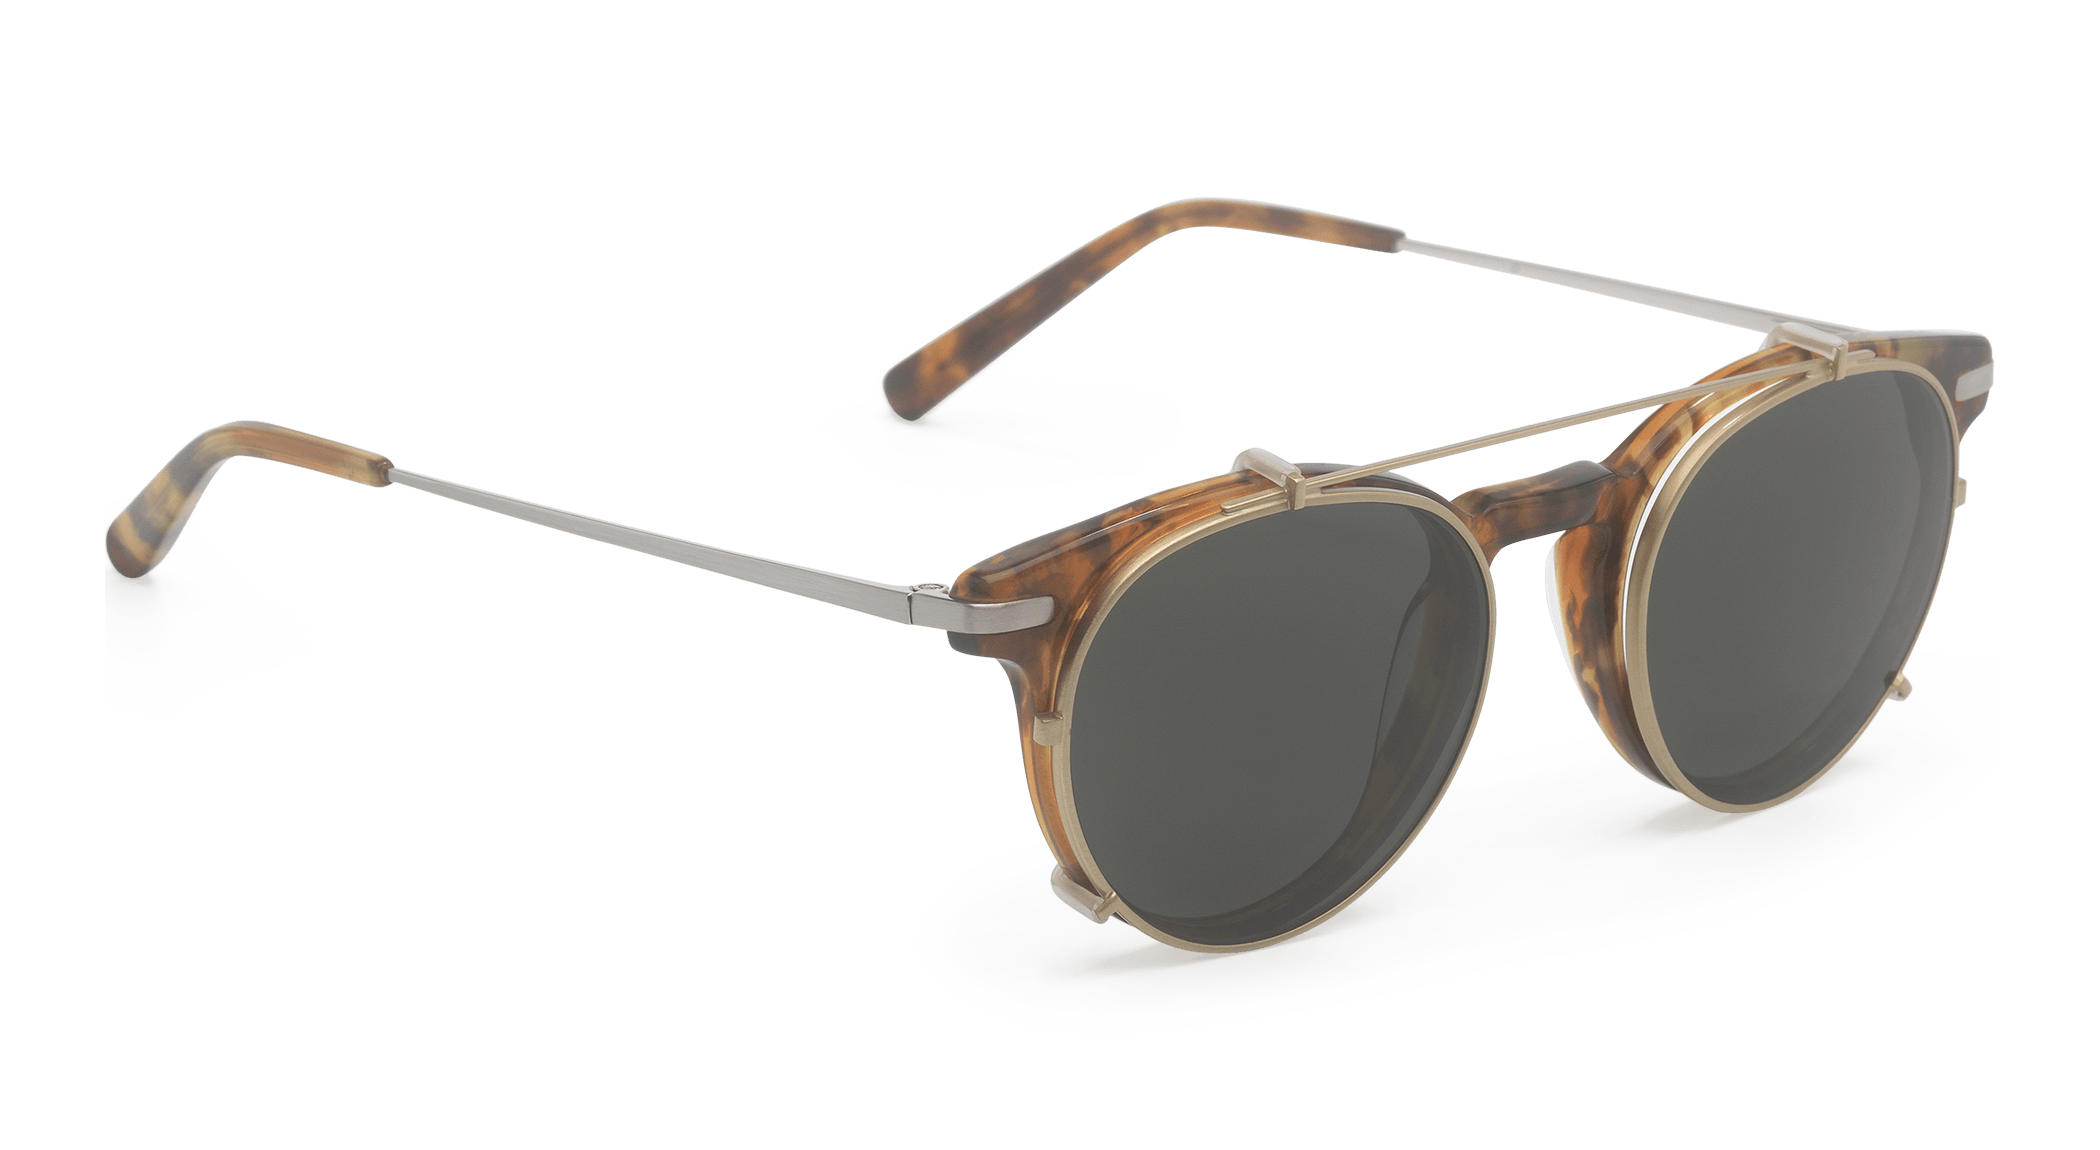 Goggles Sunglasses Aviator Ray-Ban Free HQ Image Clipart